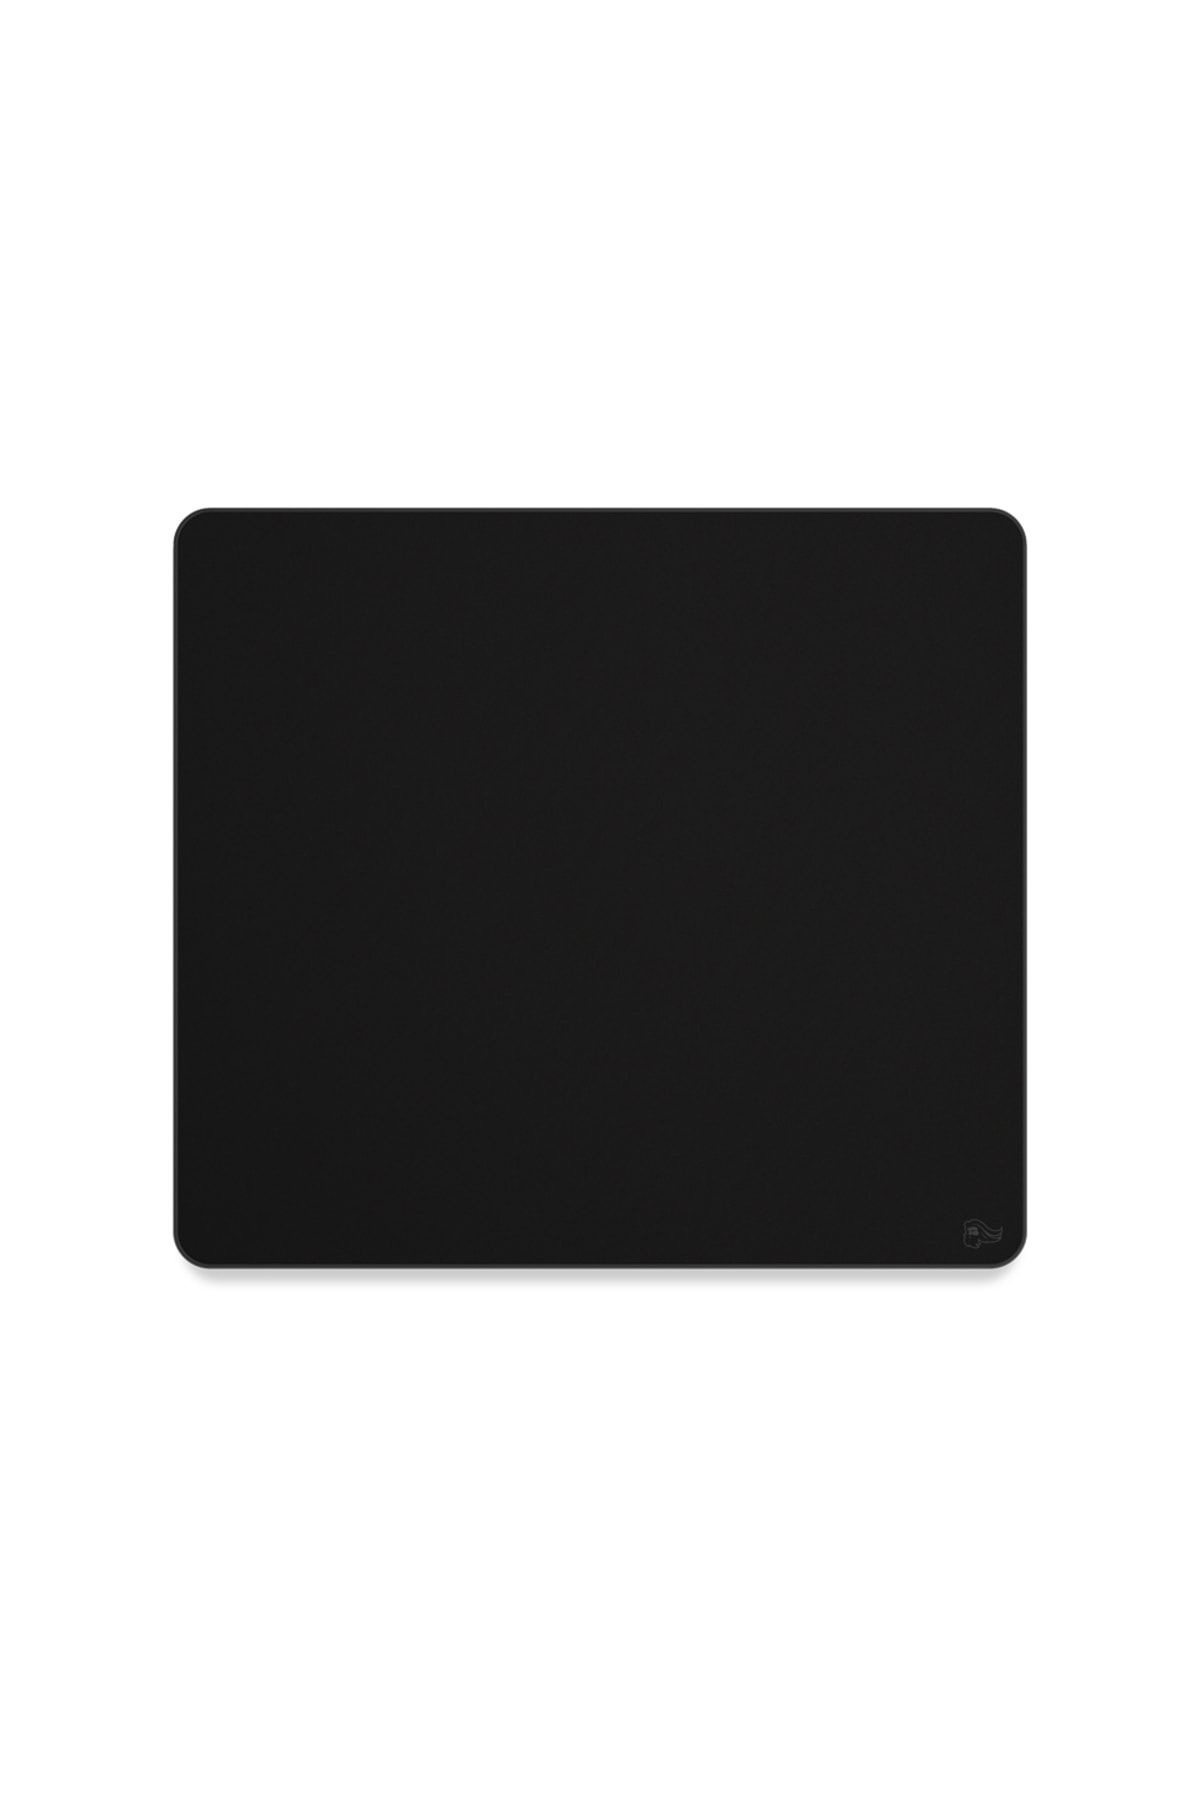 Glorious Xl Stealth Edition Mousepad 16"x18" (41x46cm)